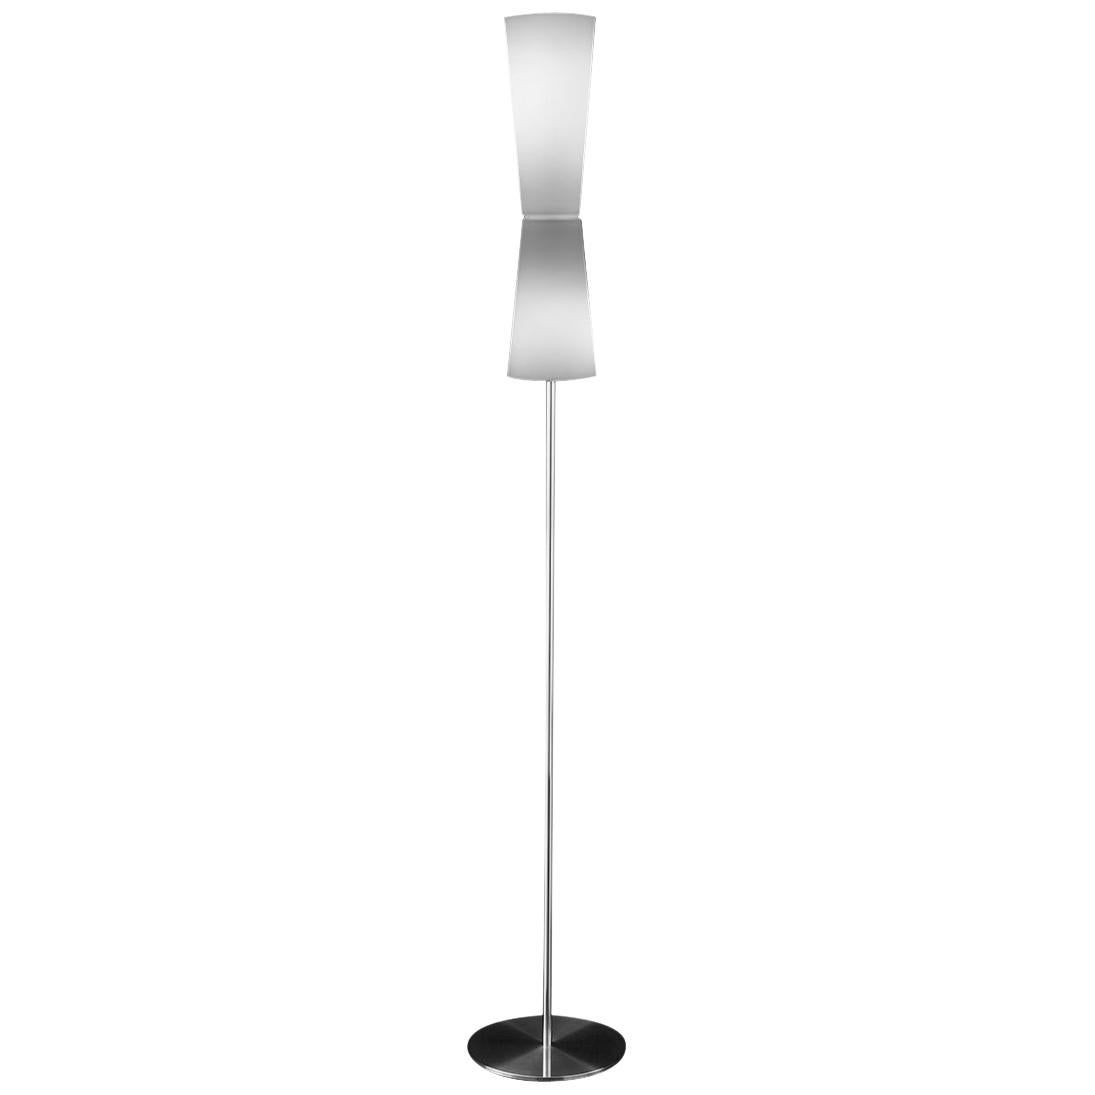 Stefano Casciani Floor Lamp 'Lu-Lu' Murano Glass and Metal by Oluce